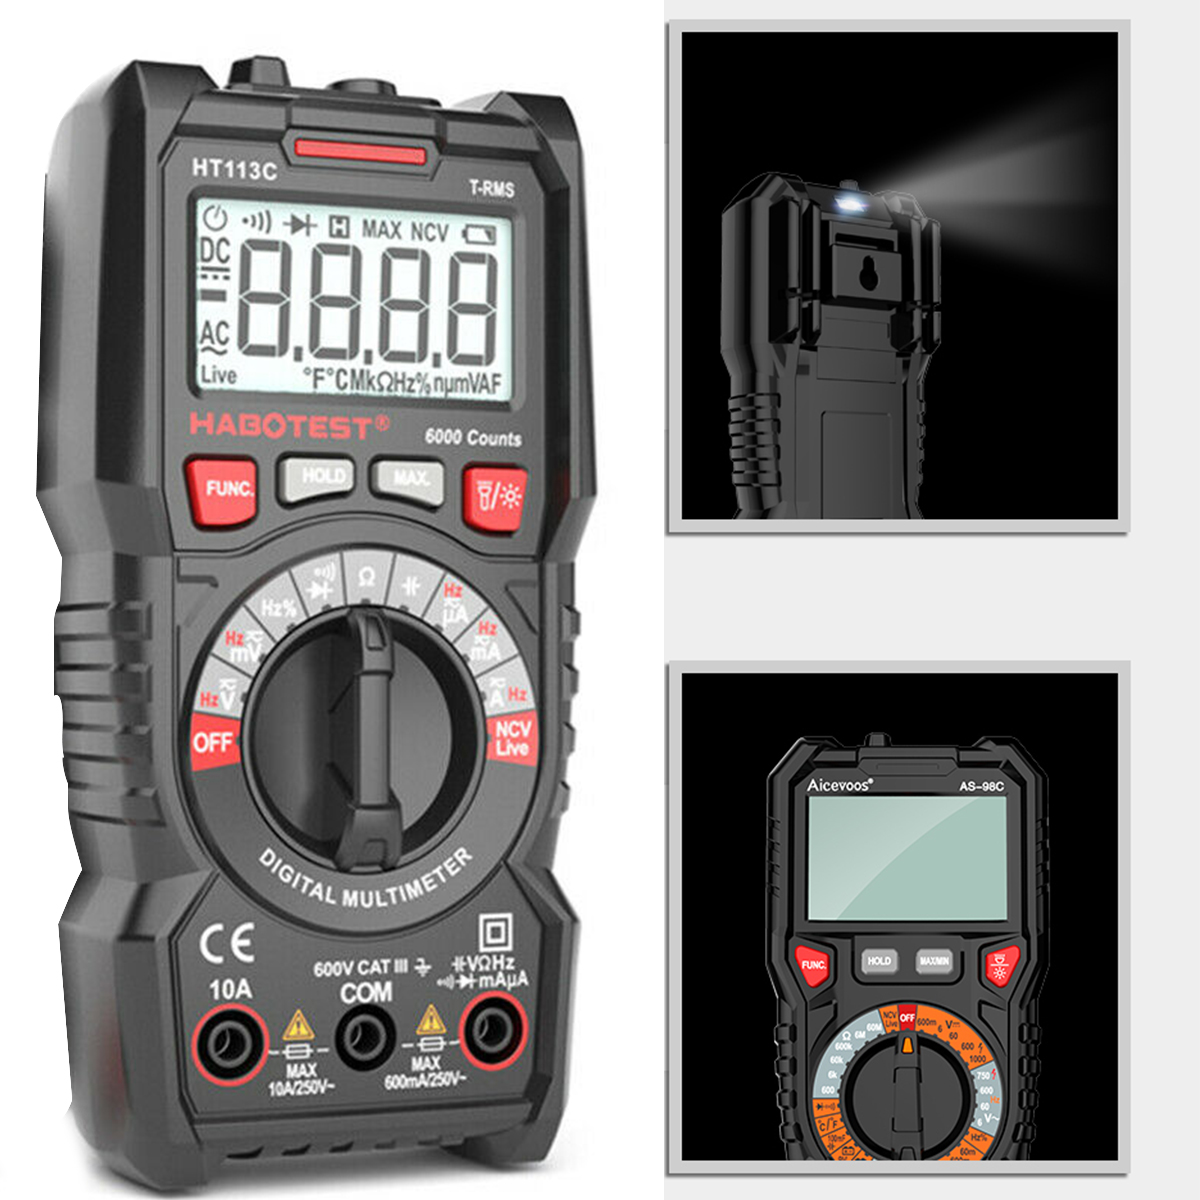 HT113C-Professional-Handheld-LCD-Digital-Multimeter-with-Flashlight-ACDC-Voltage-Meter-Amperemeter-O-1816345-1